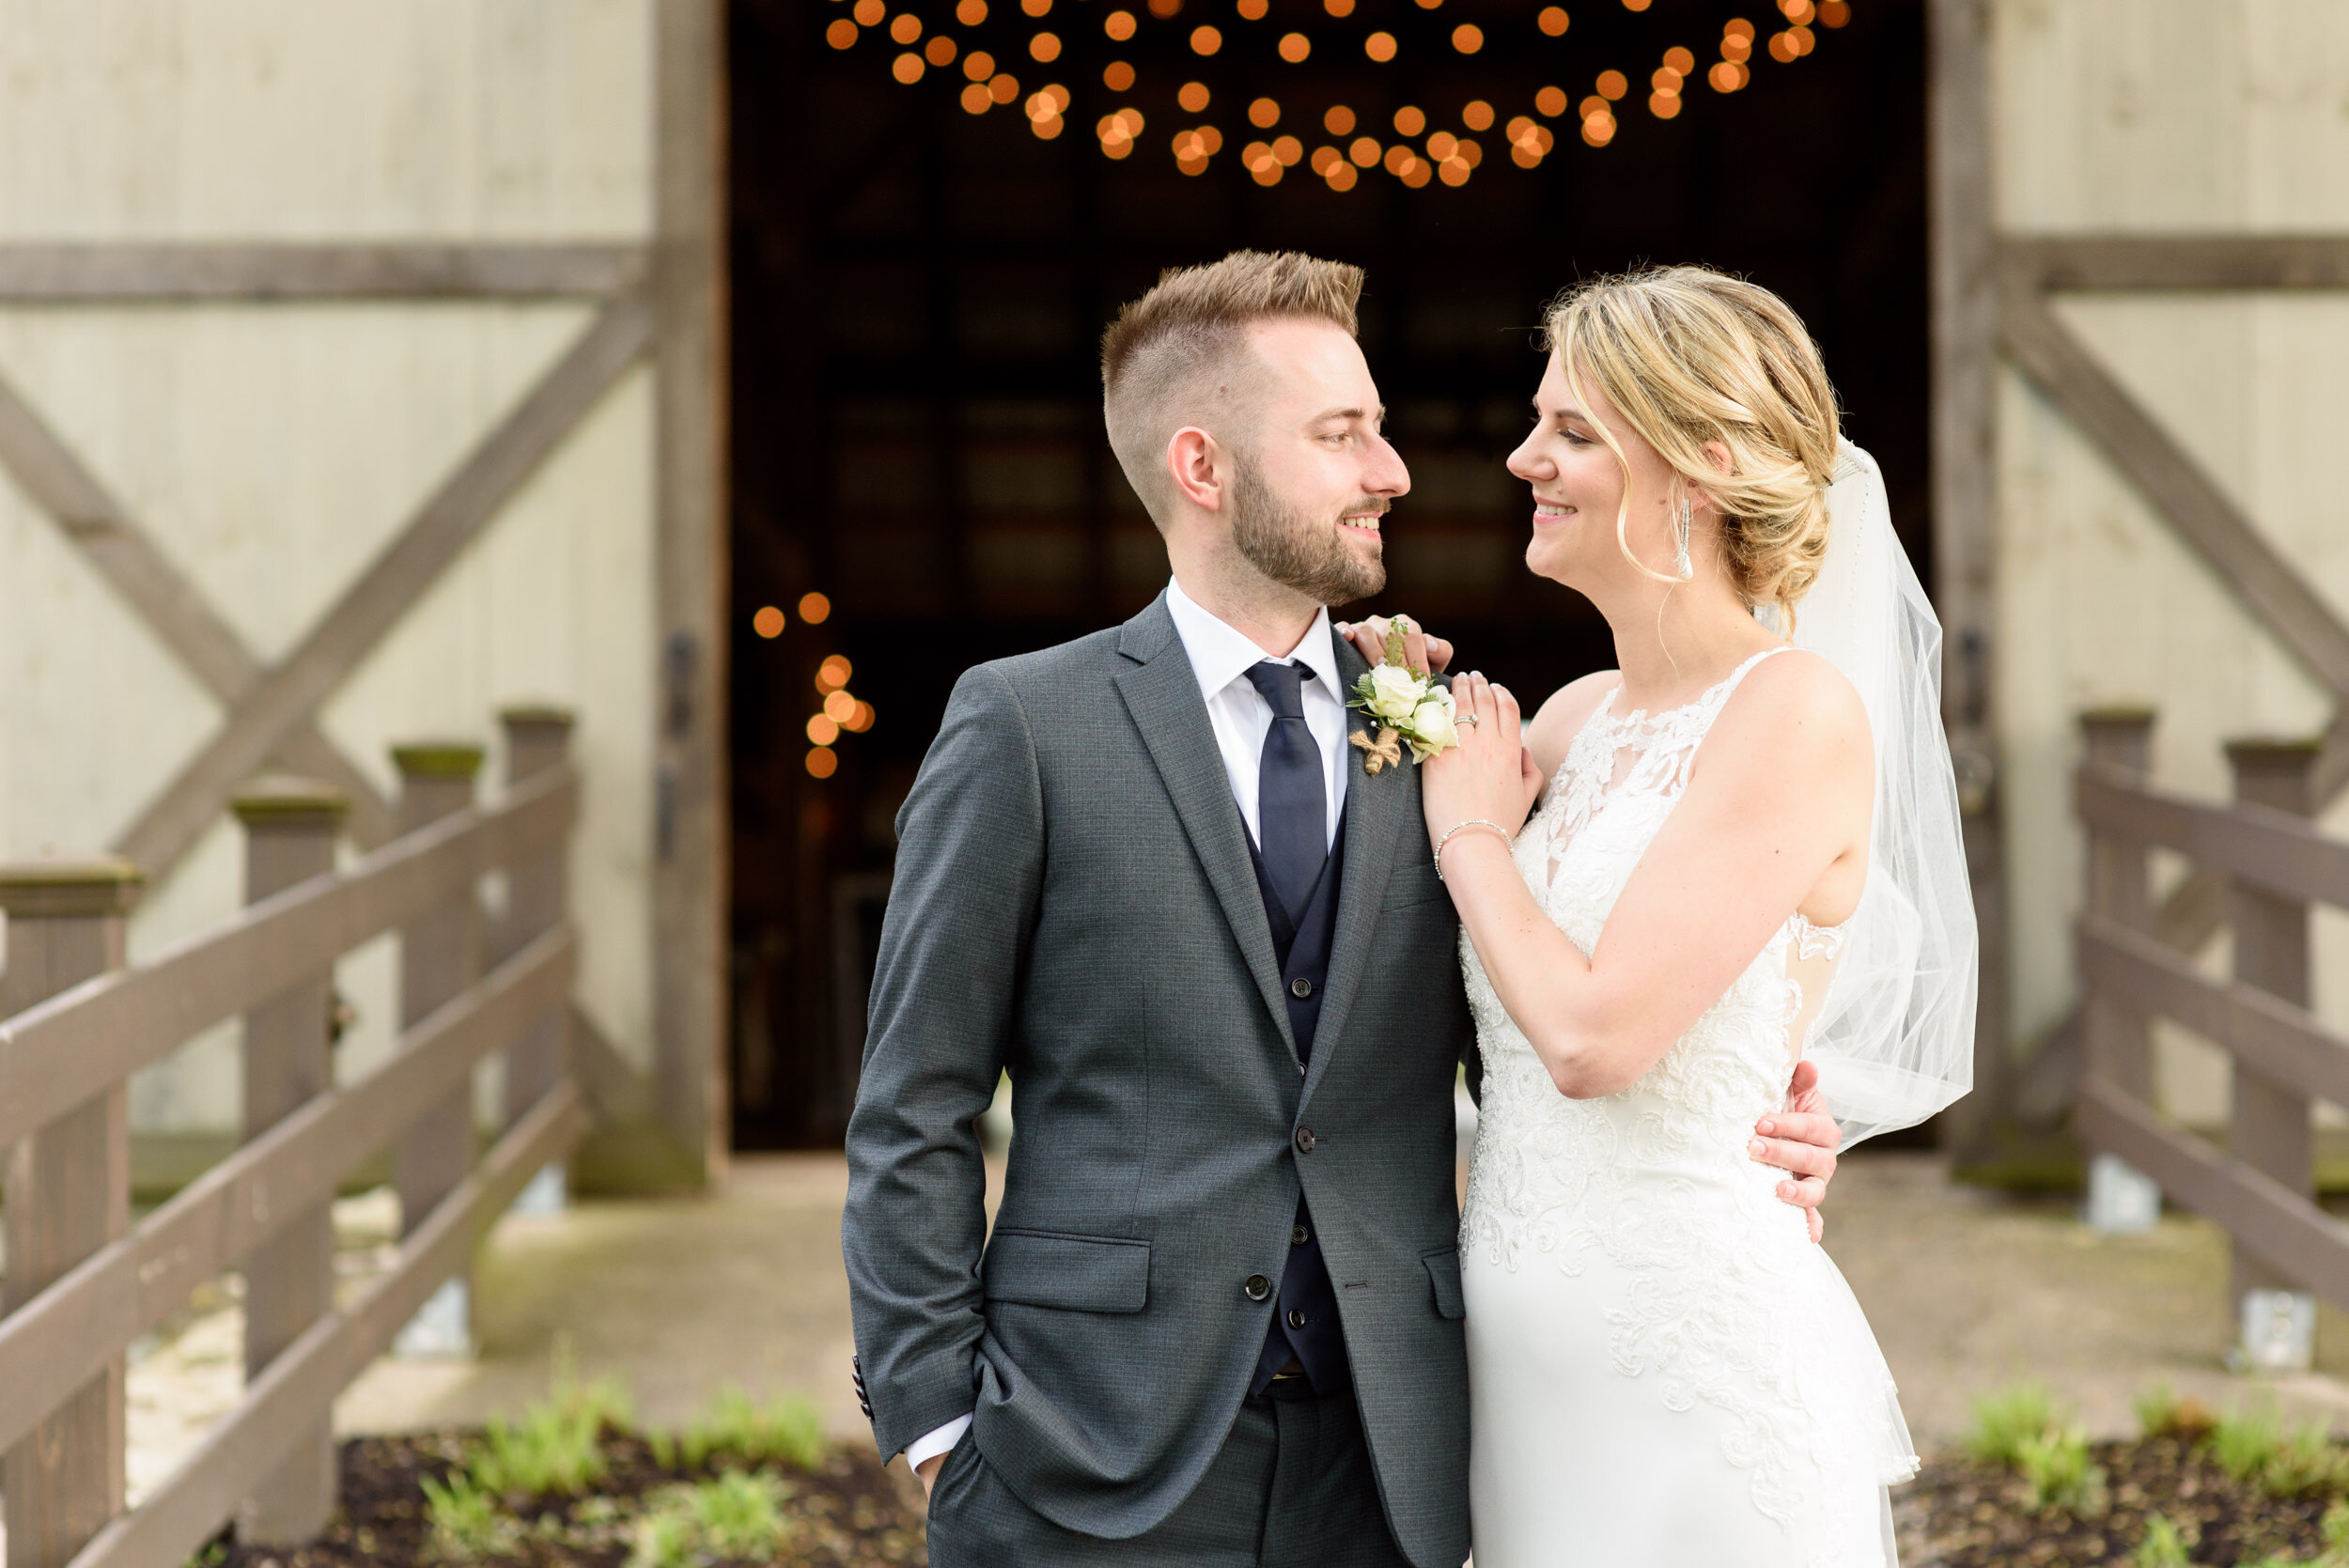  The Farm Bakery and Events bride and groom wedding photos